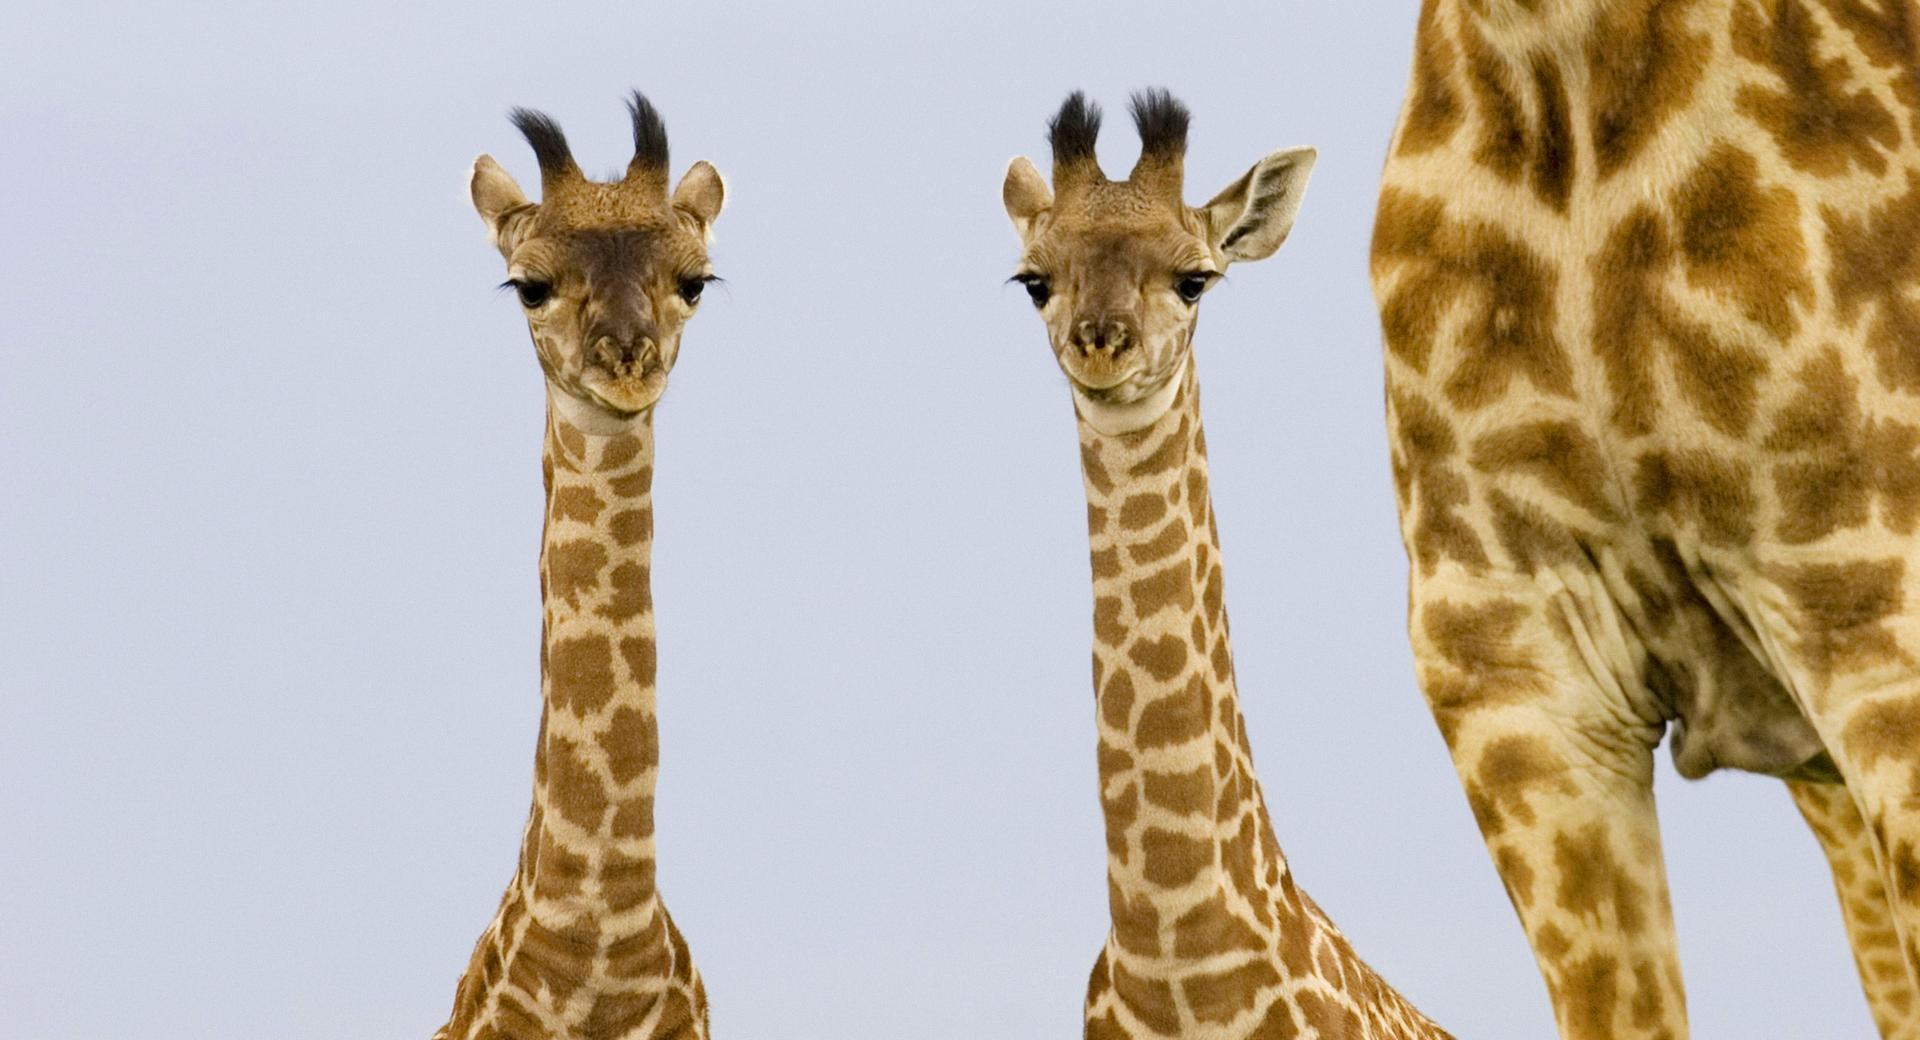 Two Newborn Giraffe Masai Mara Kenya at 1152 x 864 size wallpapers HD quality